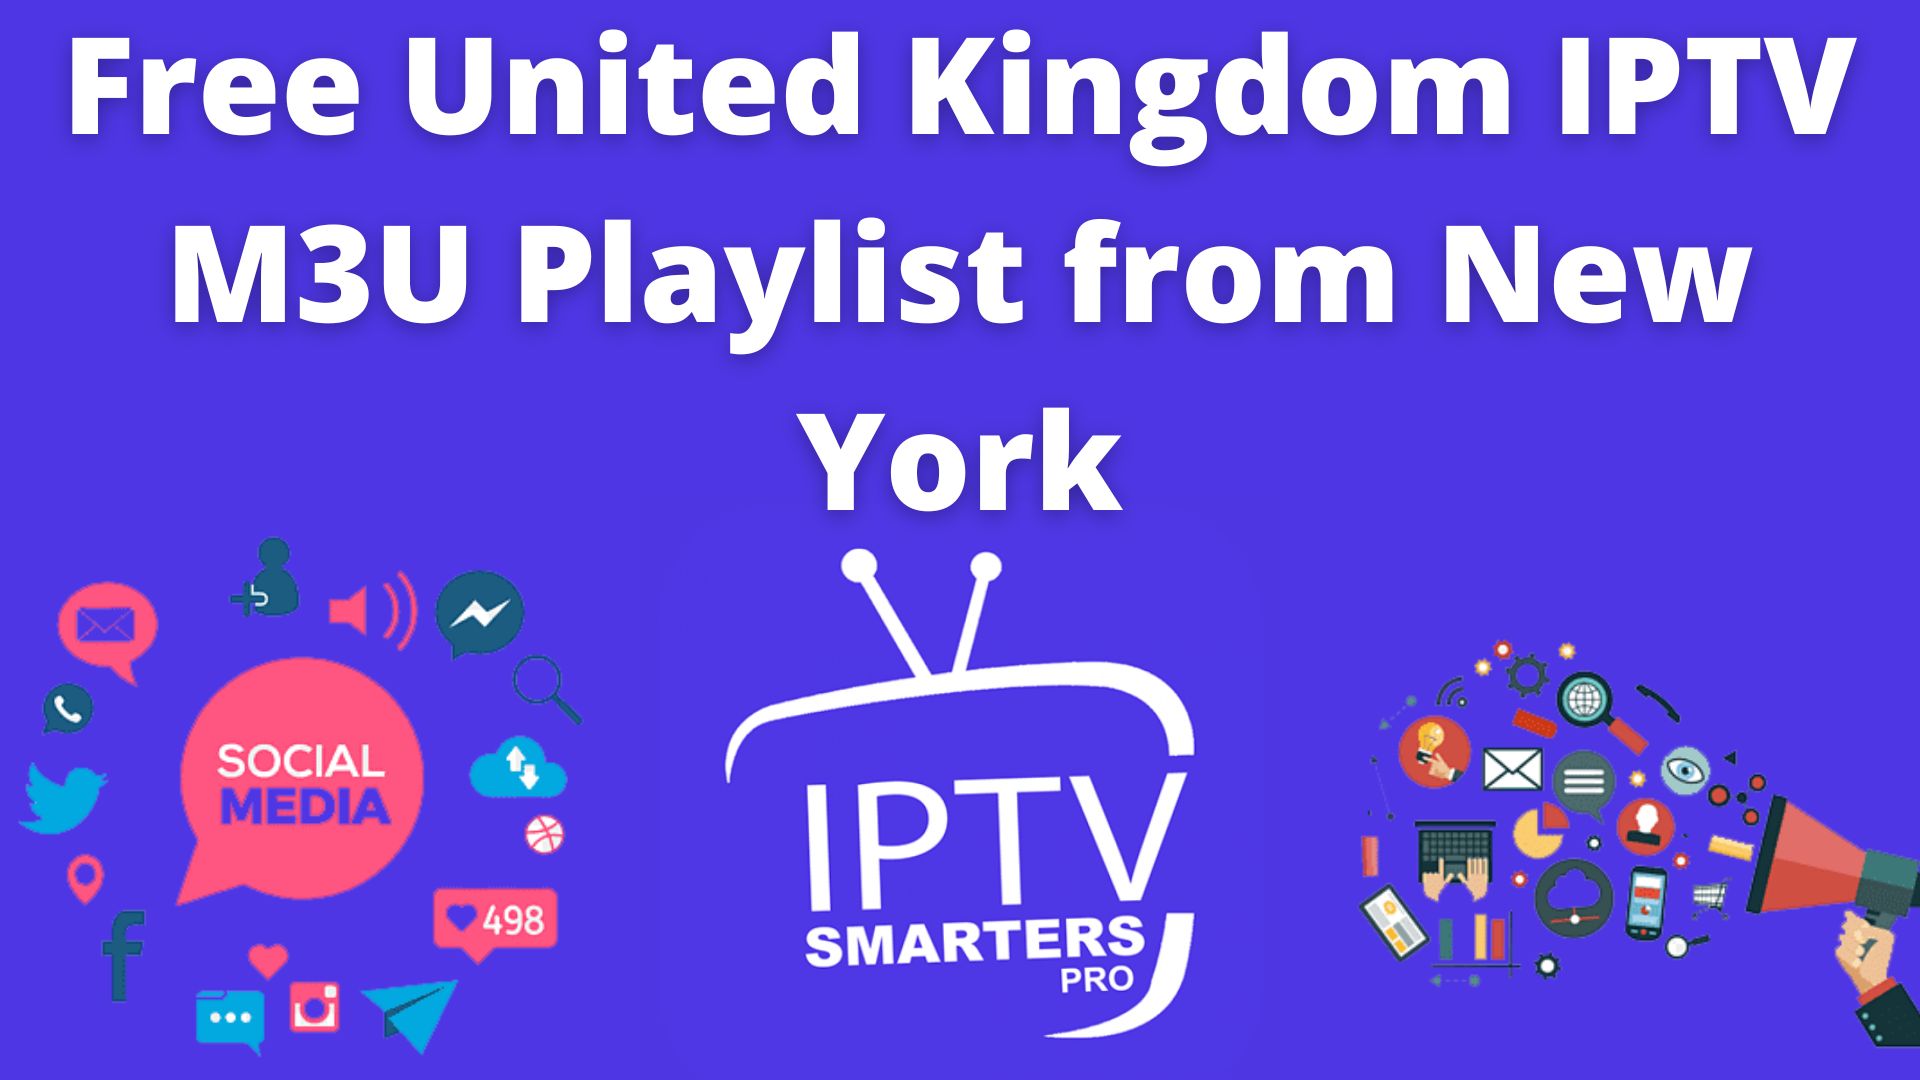 Free United Kingdom Iptv M3U Playlist From New York